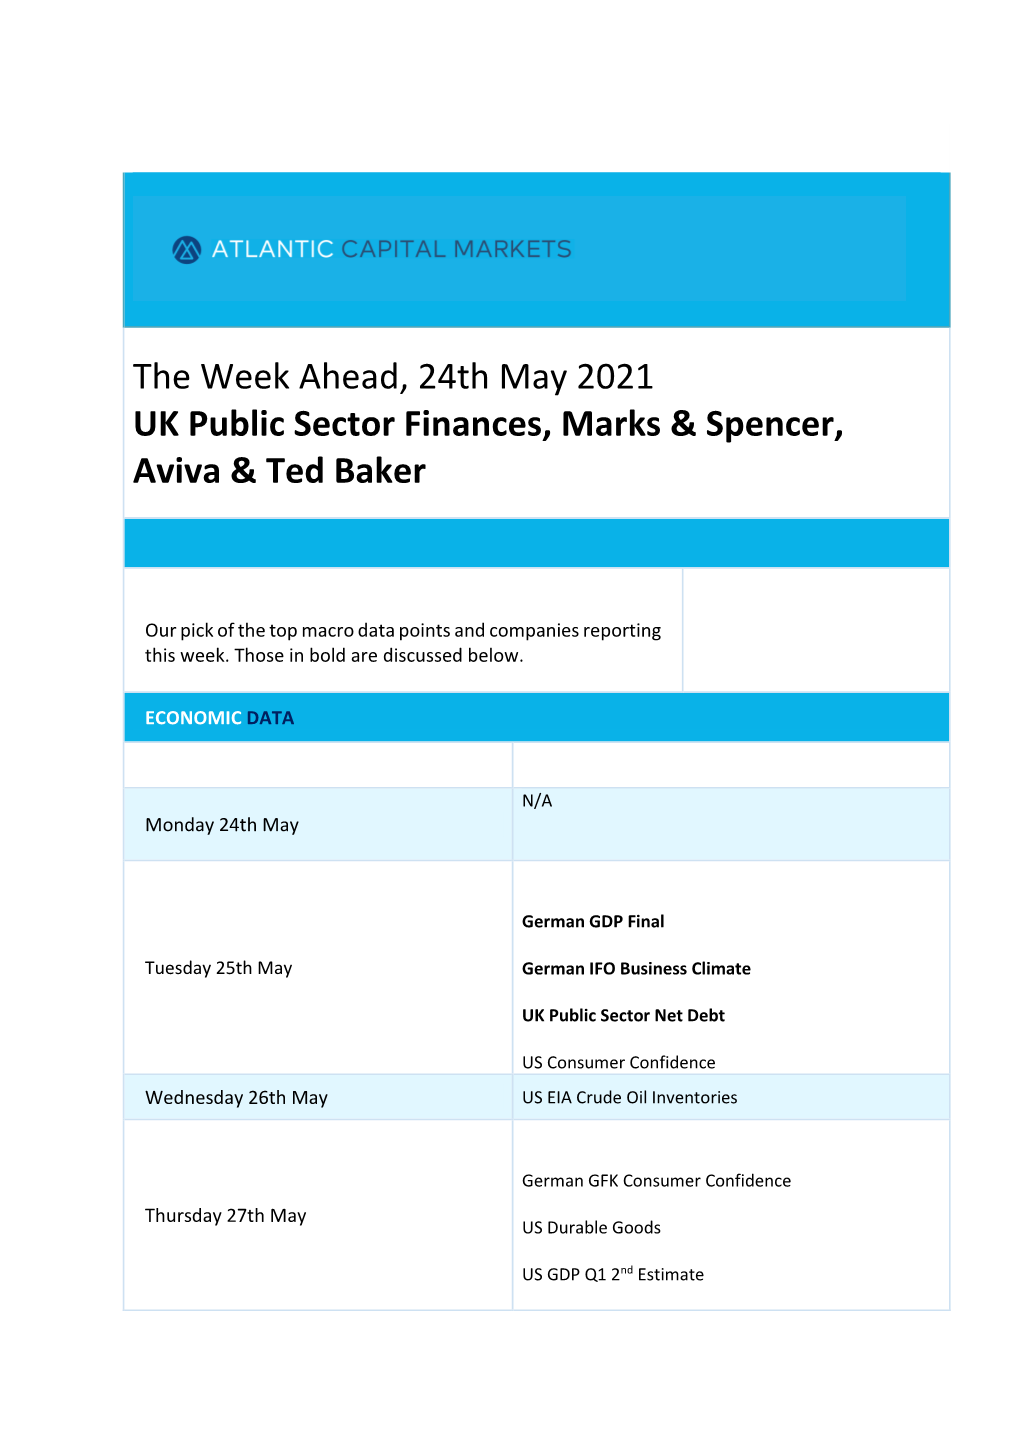 The Week Ahead, 24Th May 2021 UK Public Sector Finances, Marks & Spencer, Aviva & Ted Baker